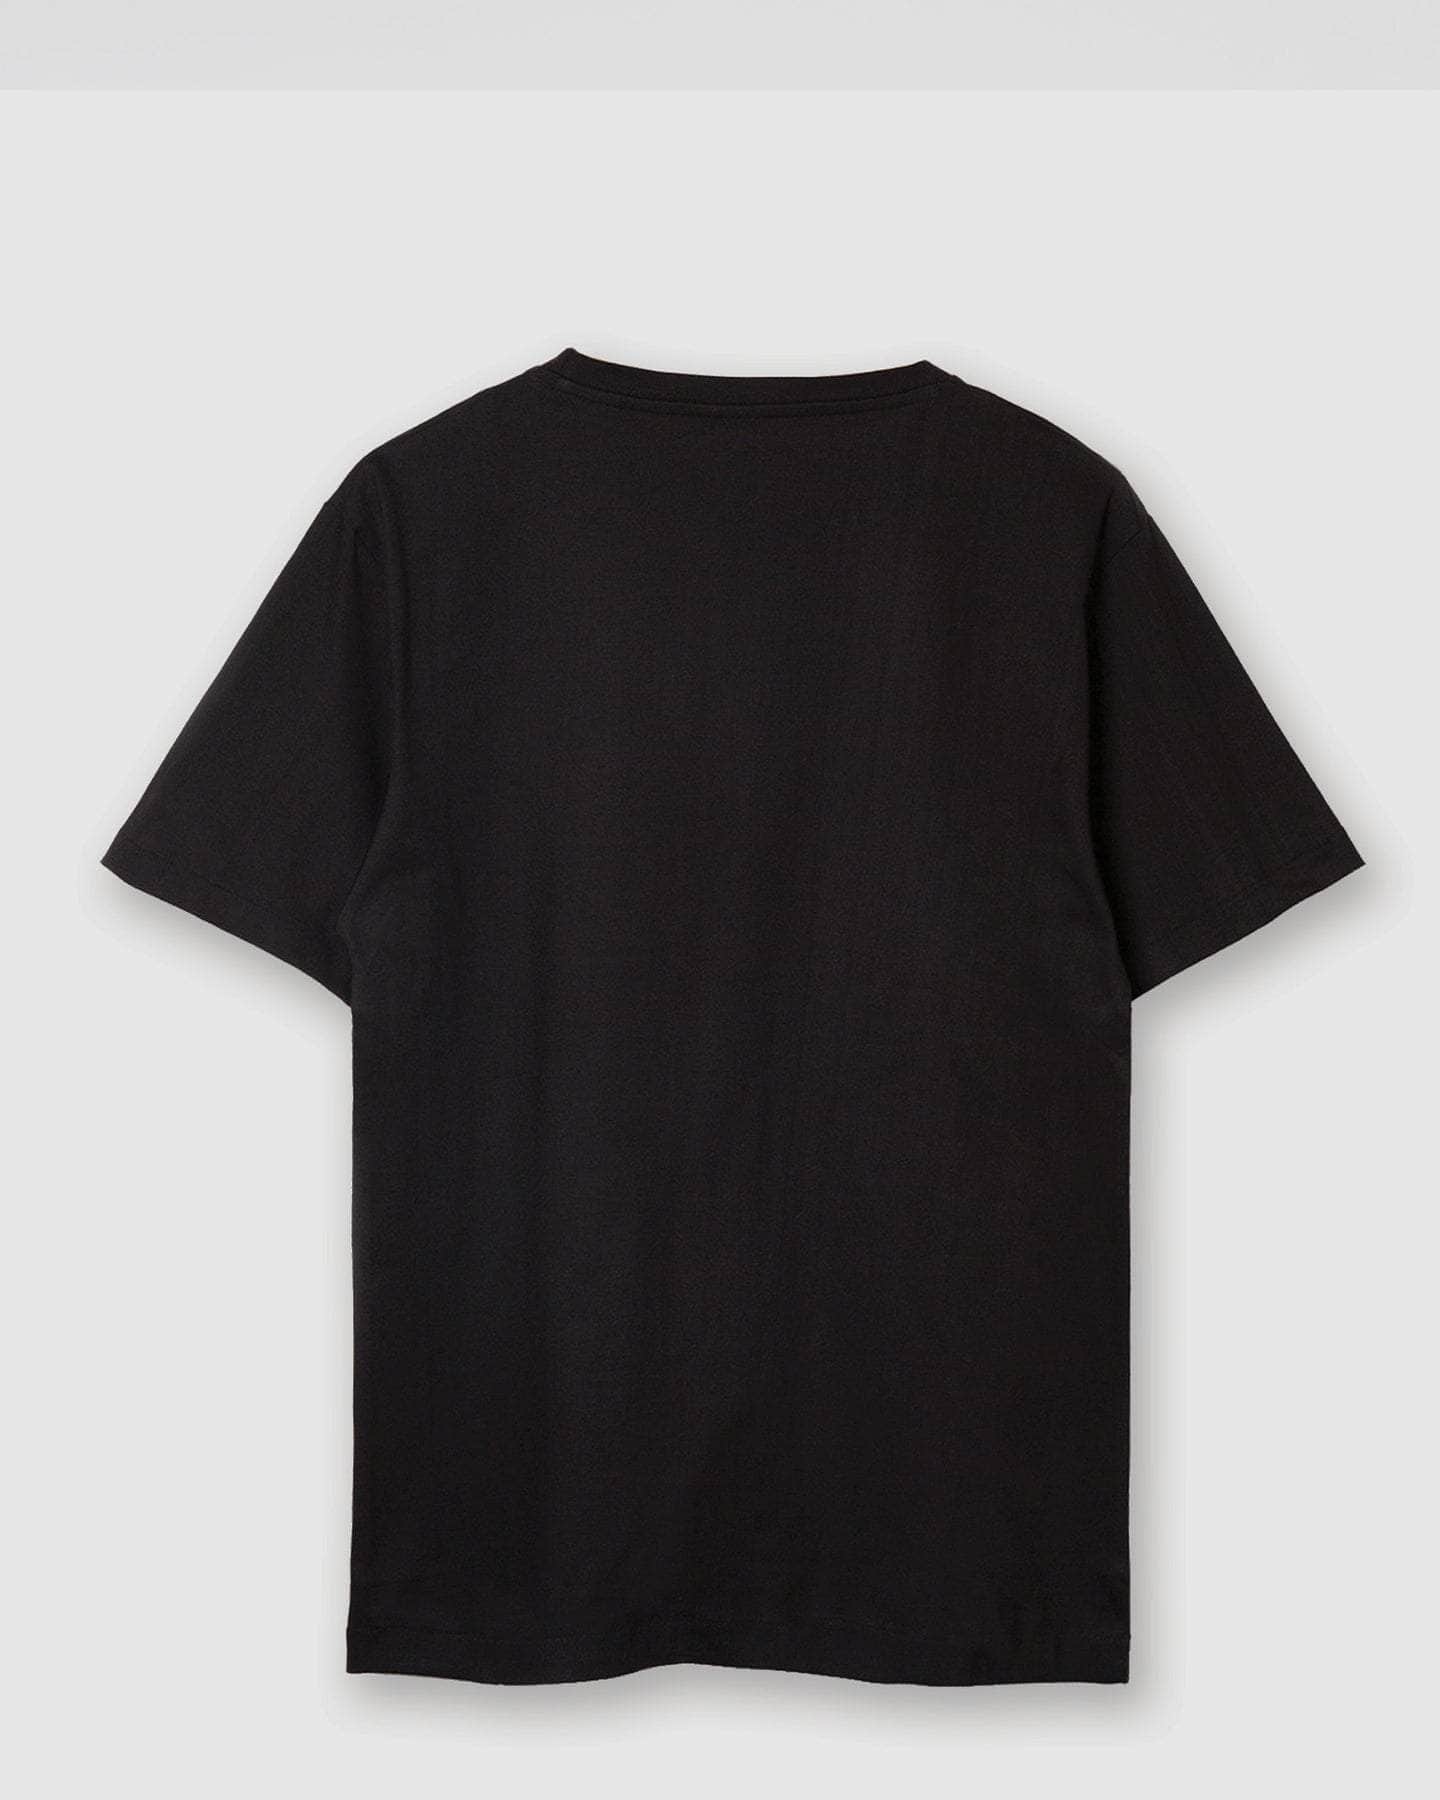 Logo Soho London S/S T-Shirt Black